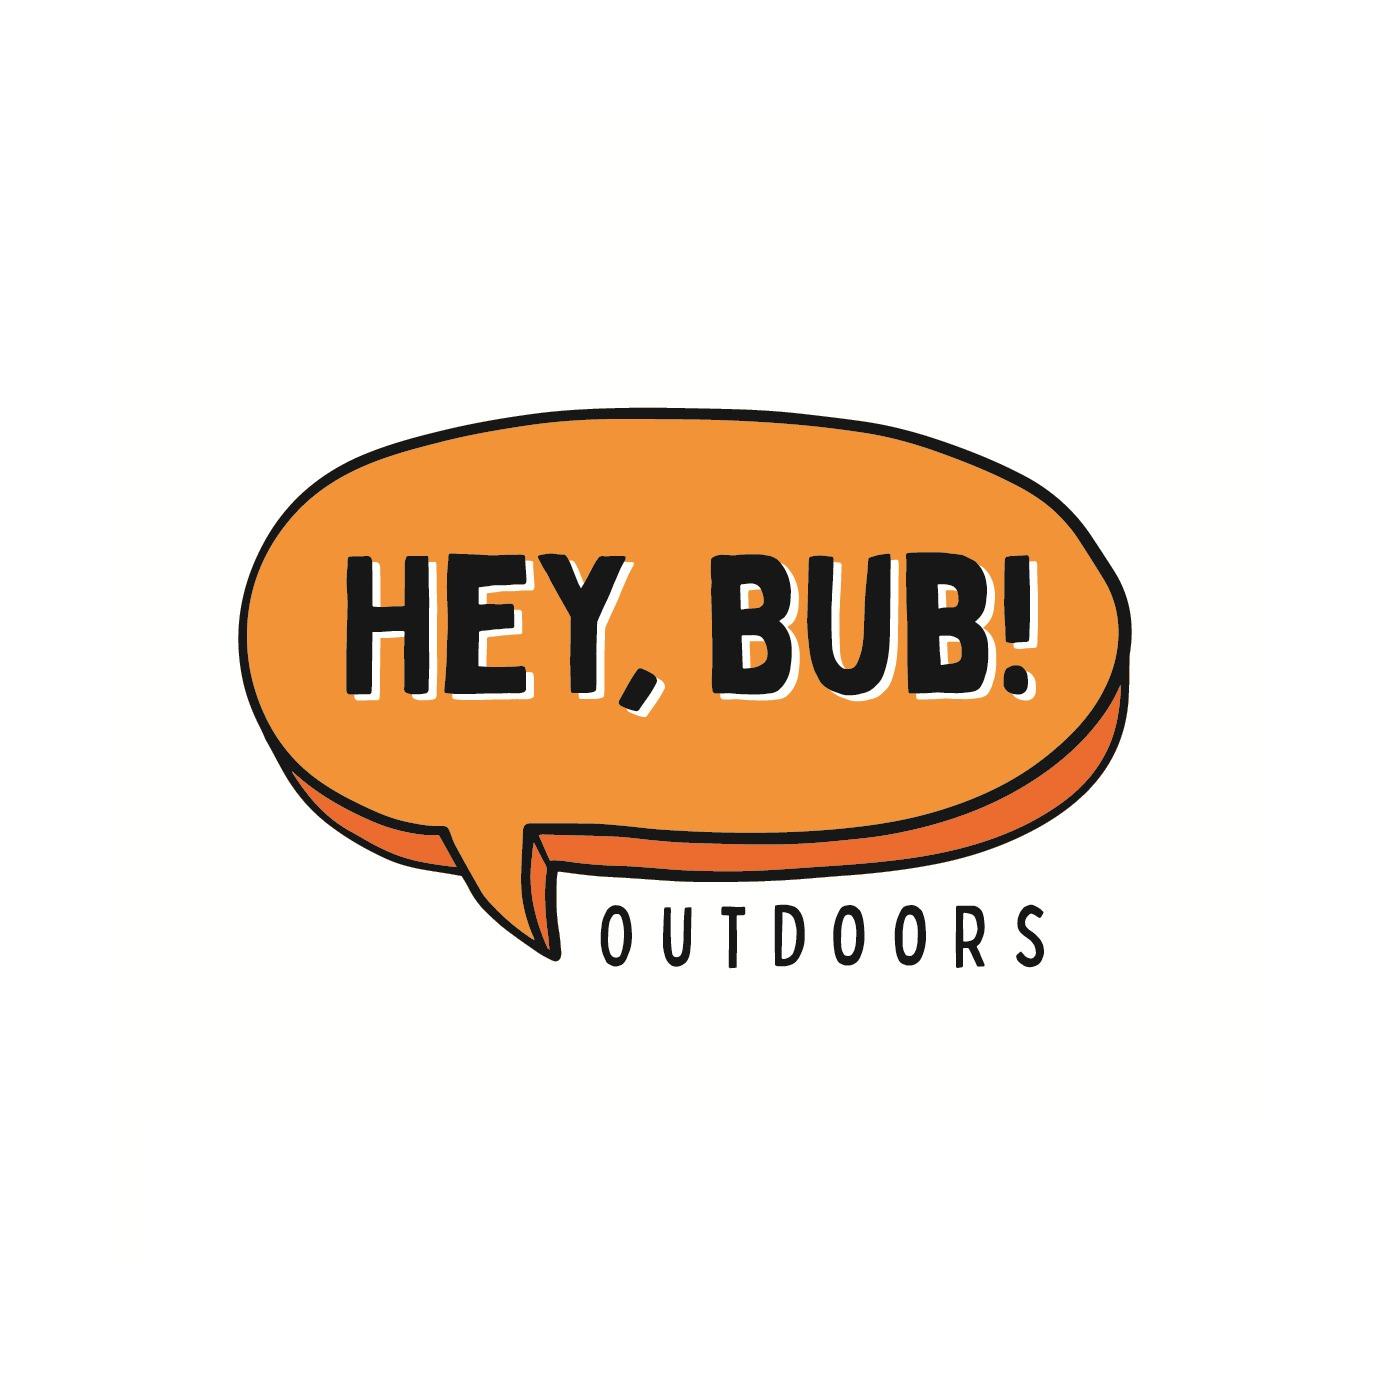 Hey, Bub! Outdoors